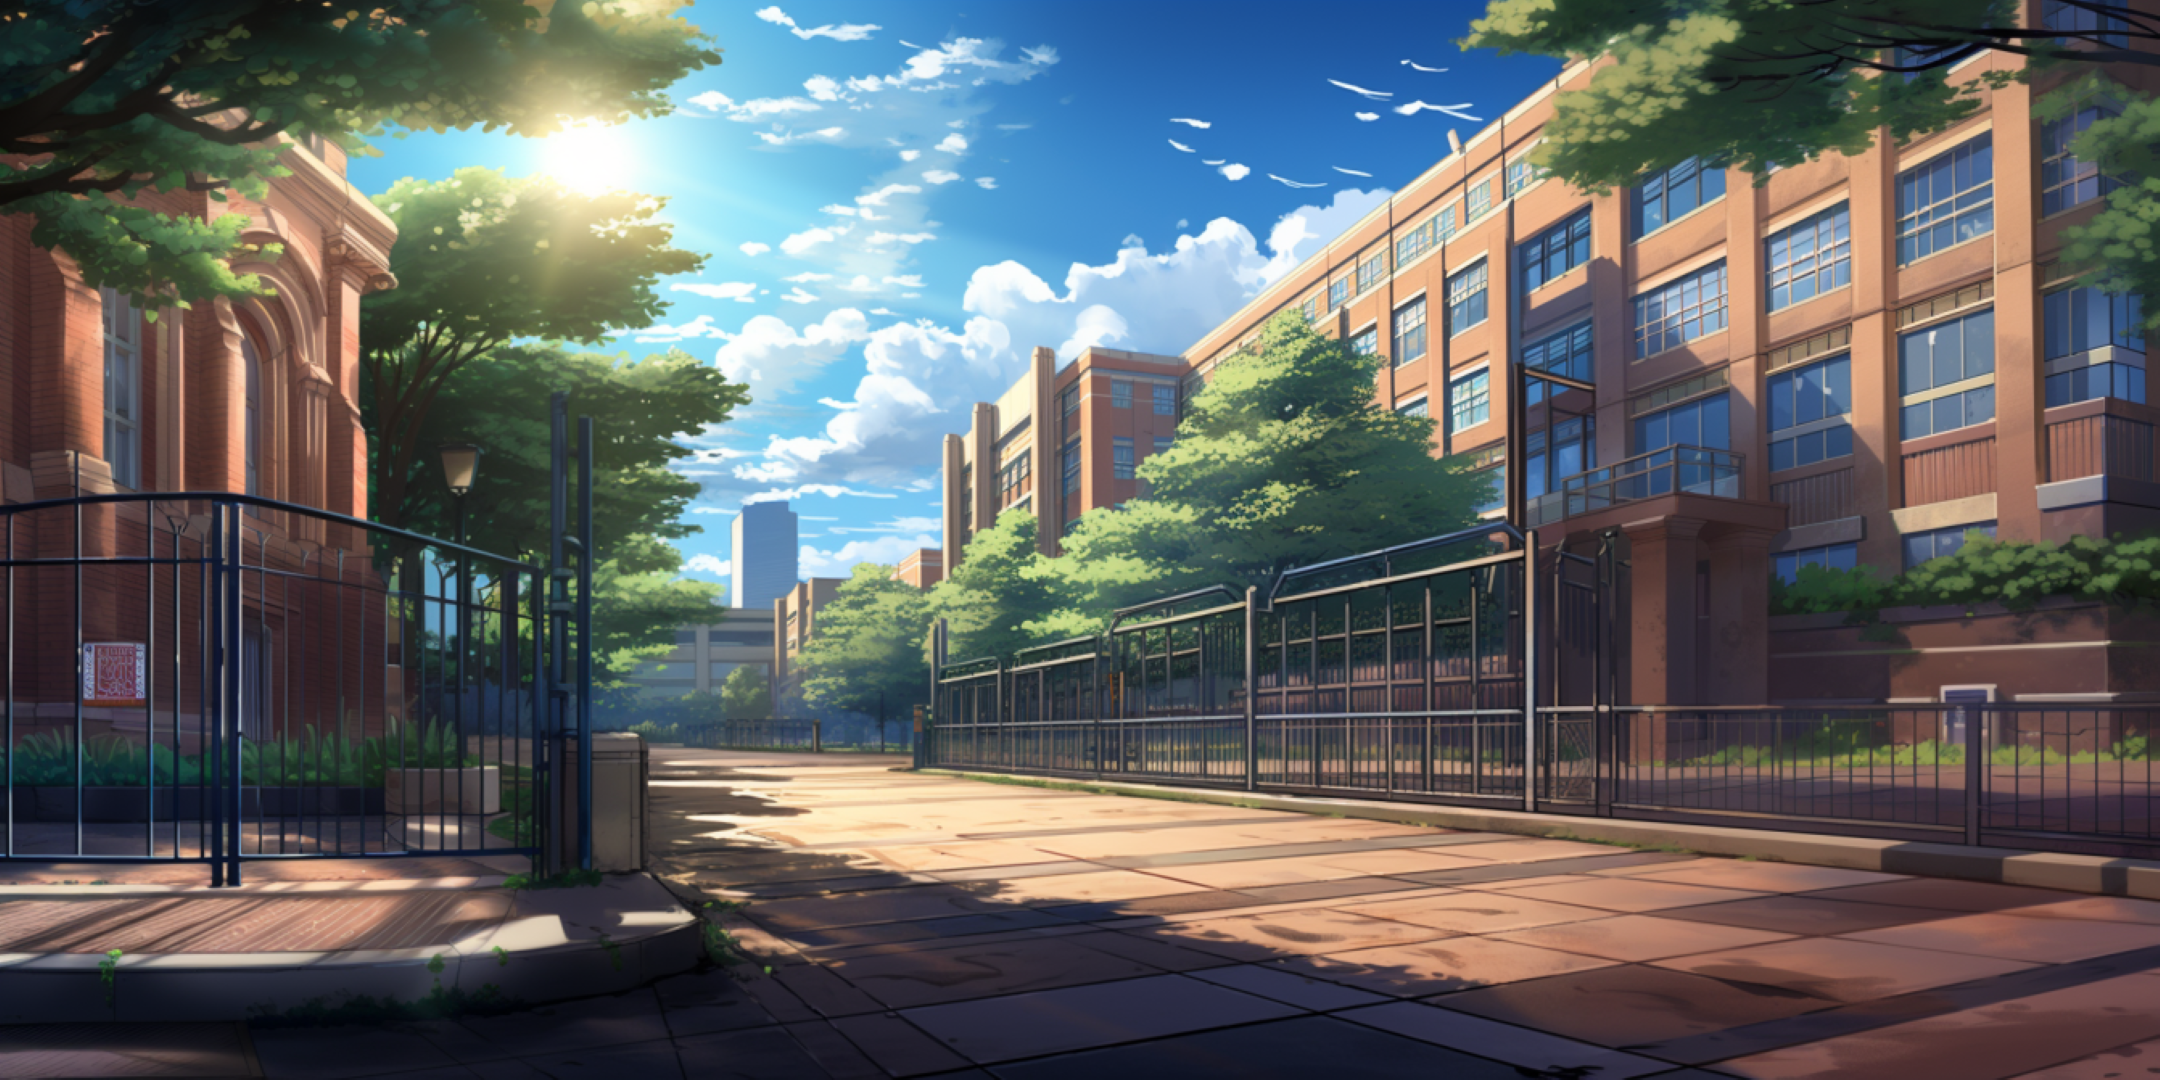 Anime-Landscape-Park-Anime-Background by dingdog12 on DeviantArt